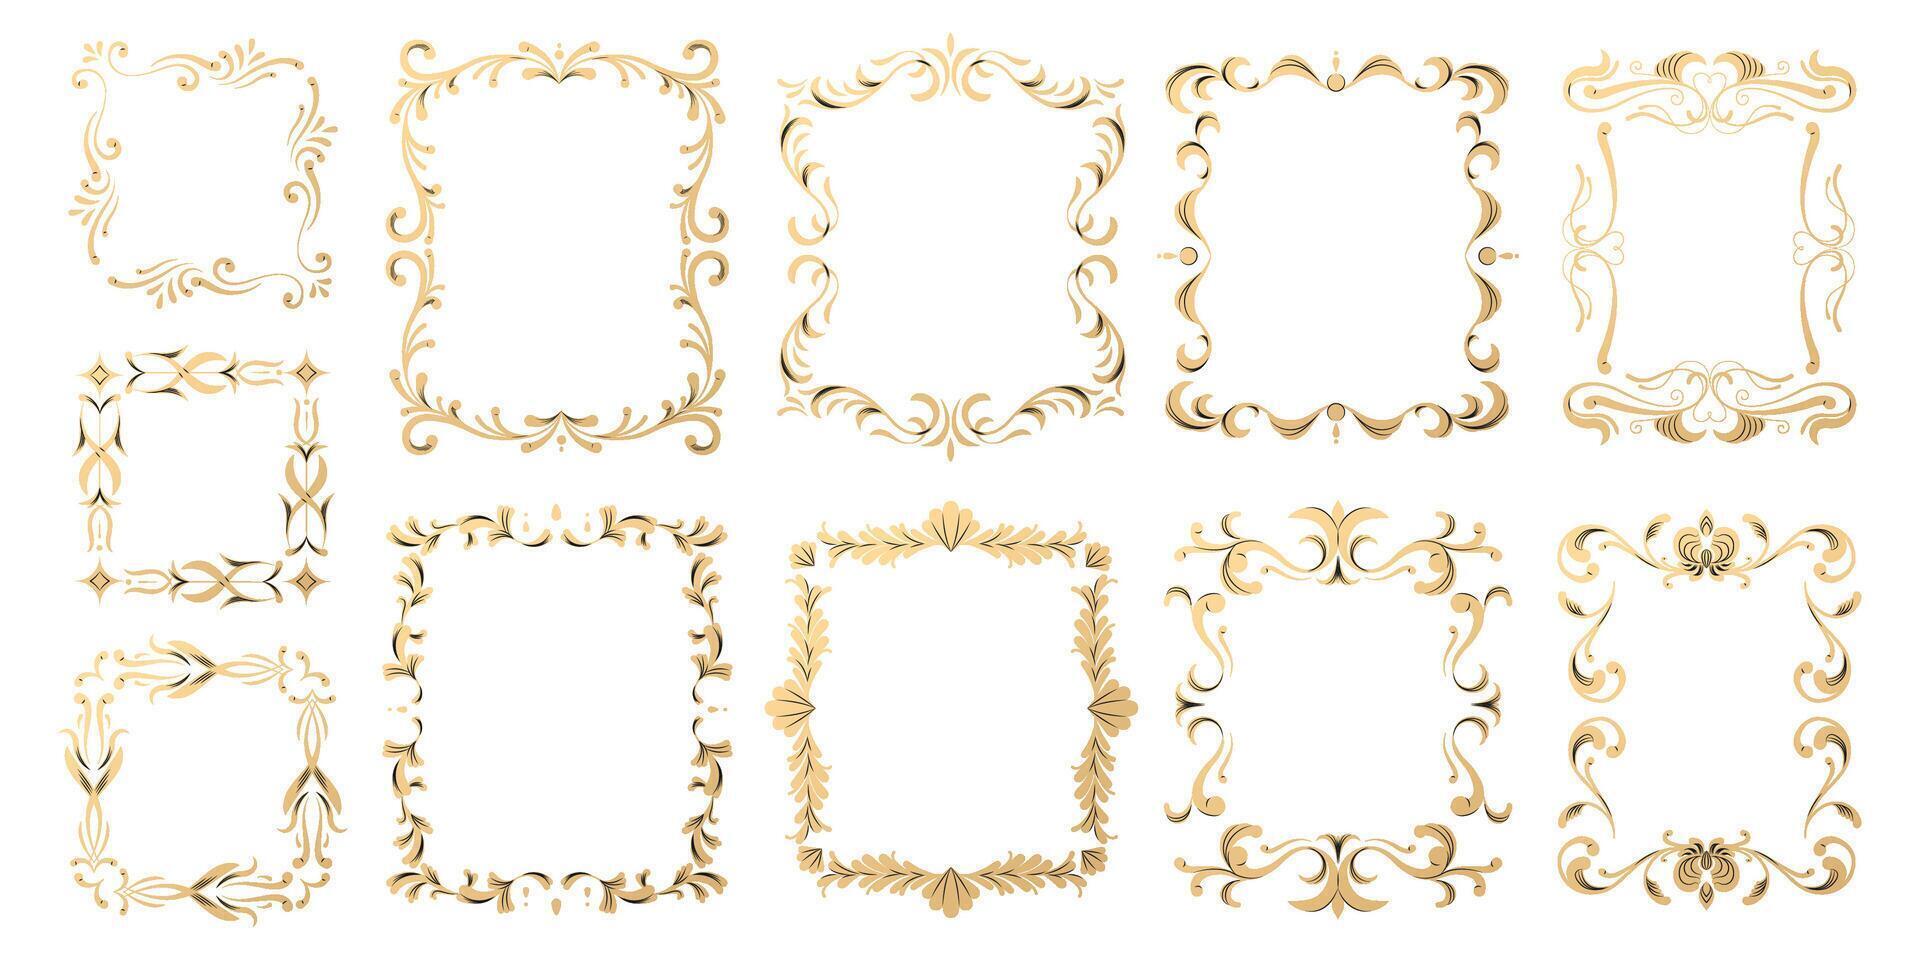 Luxury ornamental frames. Elegant decorative borders with flourish decoration, antique gold frame and flower borders. Vector illustration